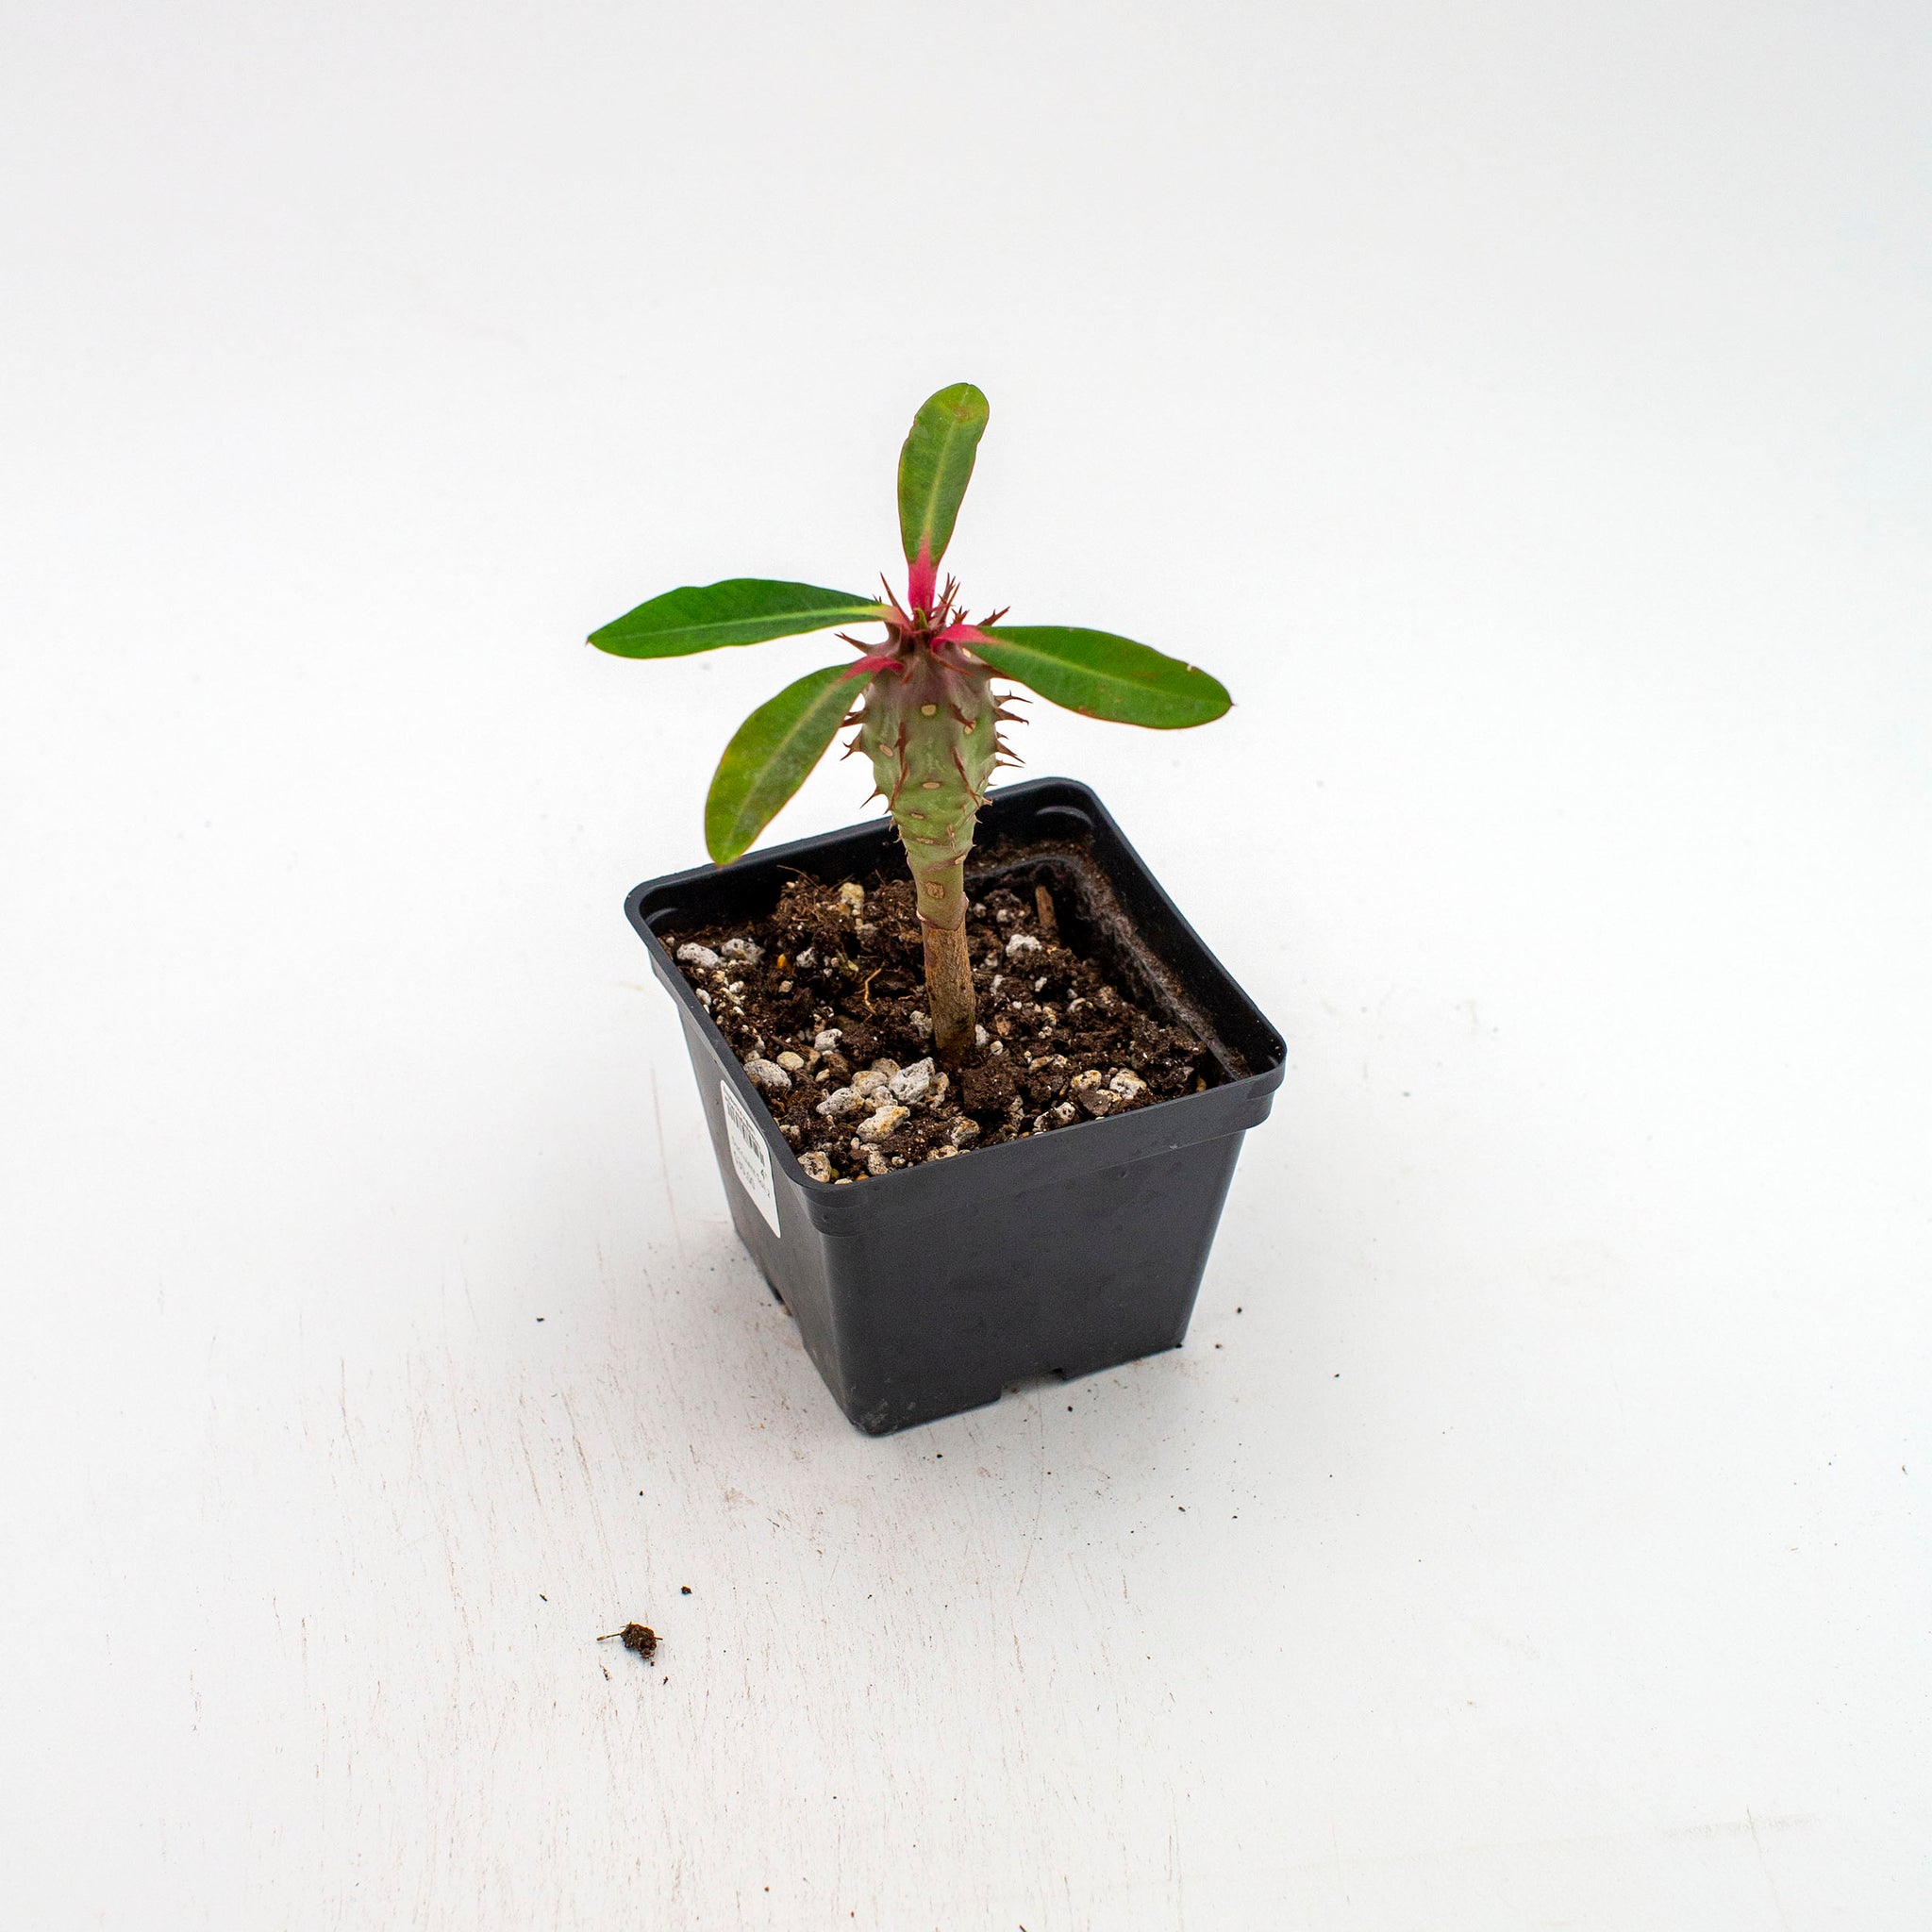 Euphorbia vigueri ankaranafantsiensis